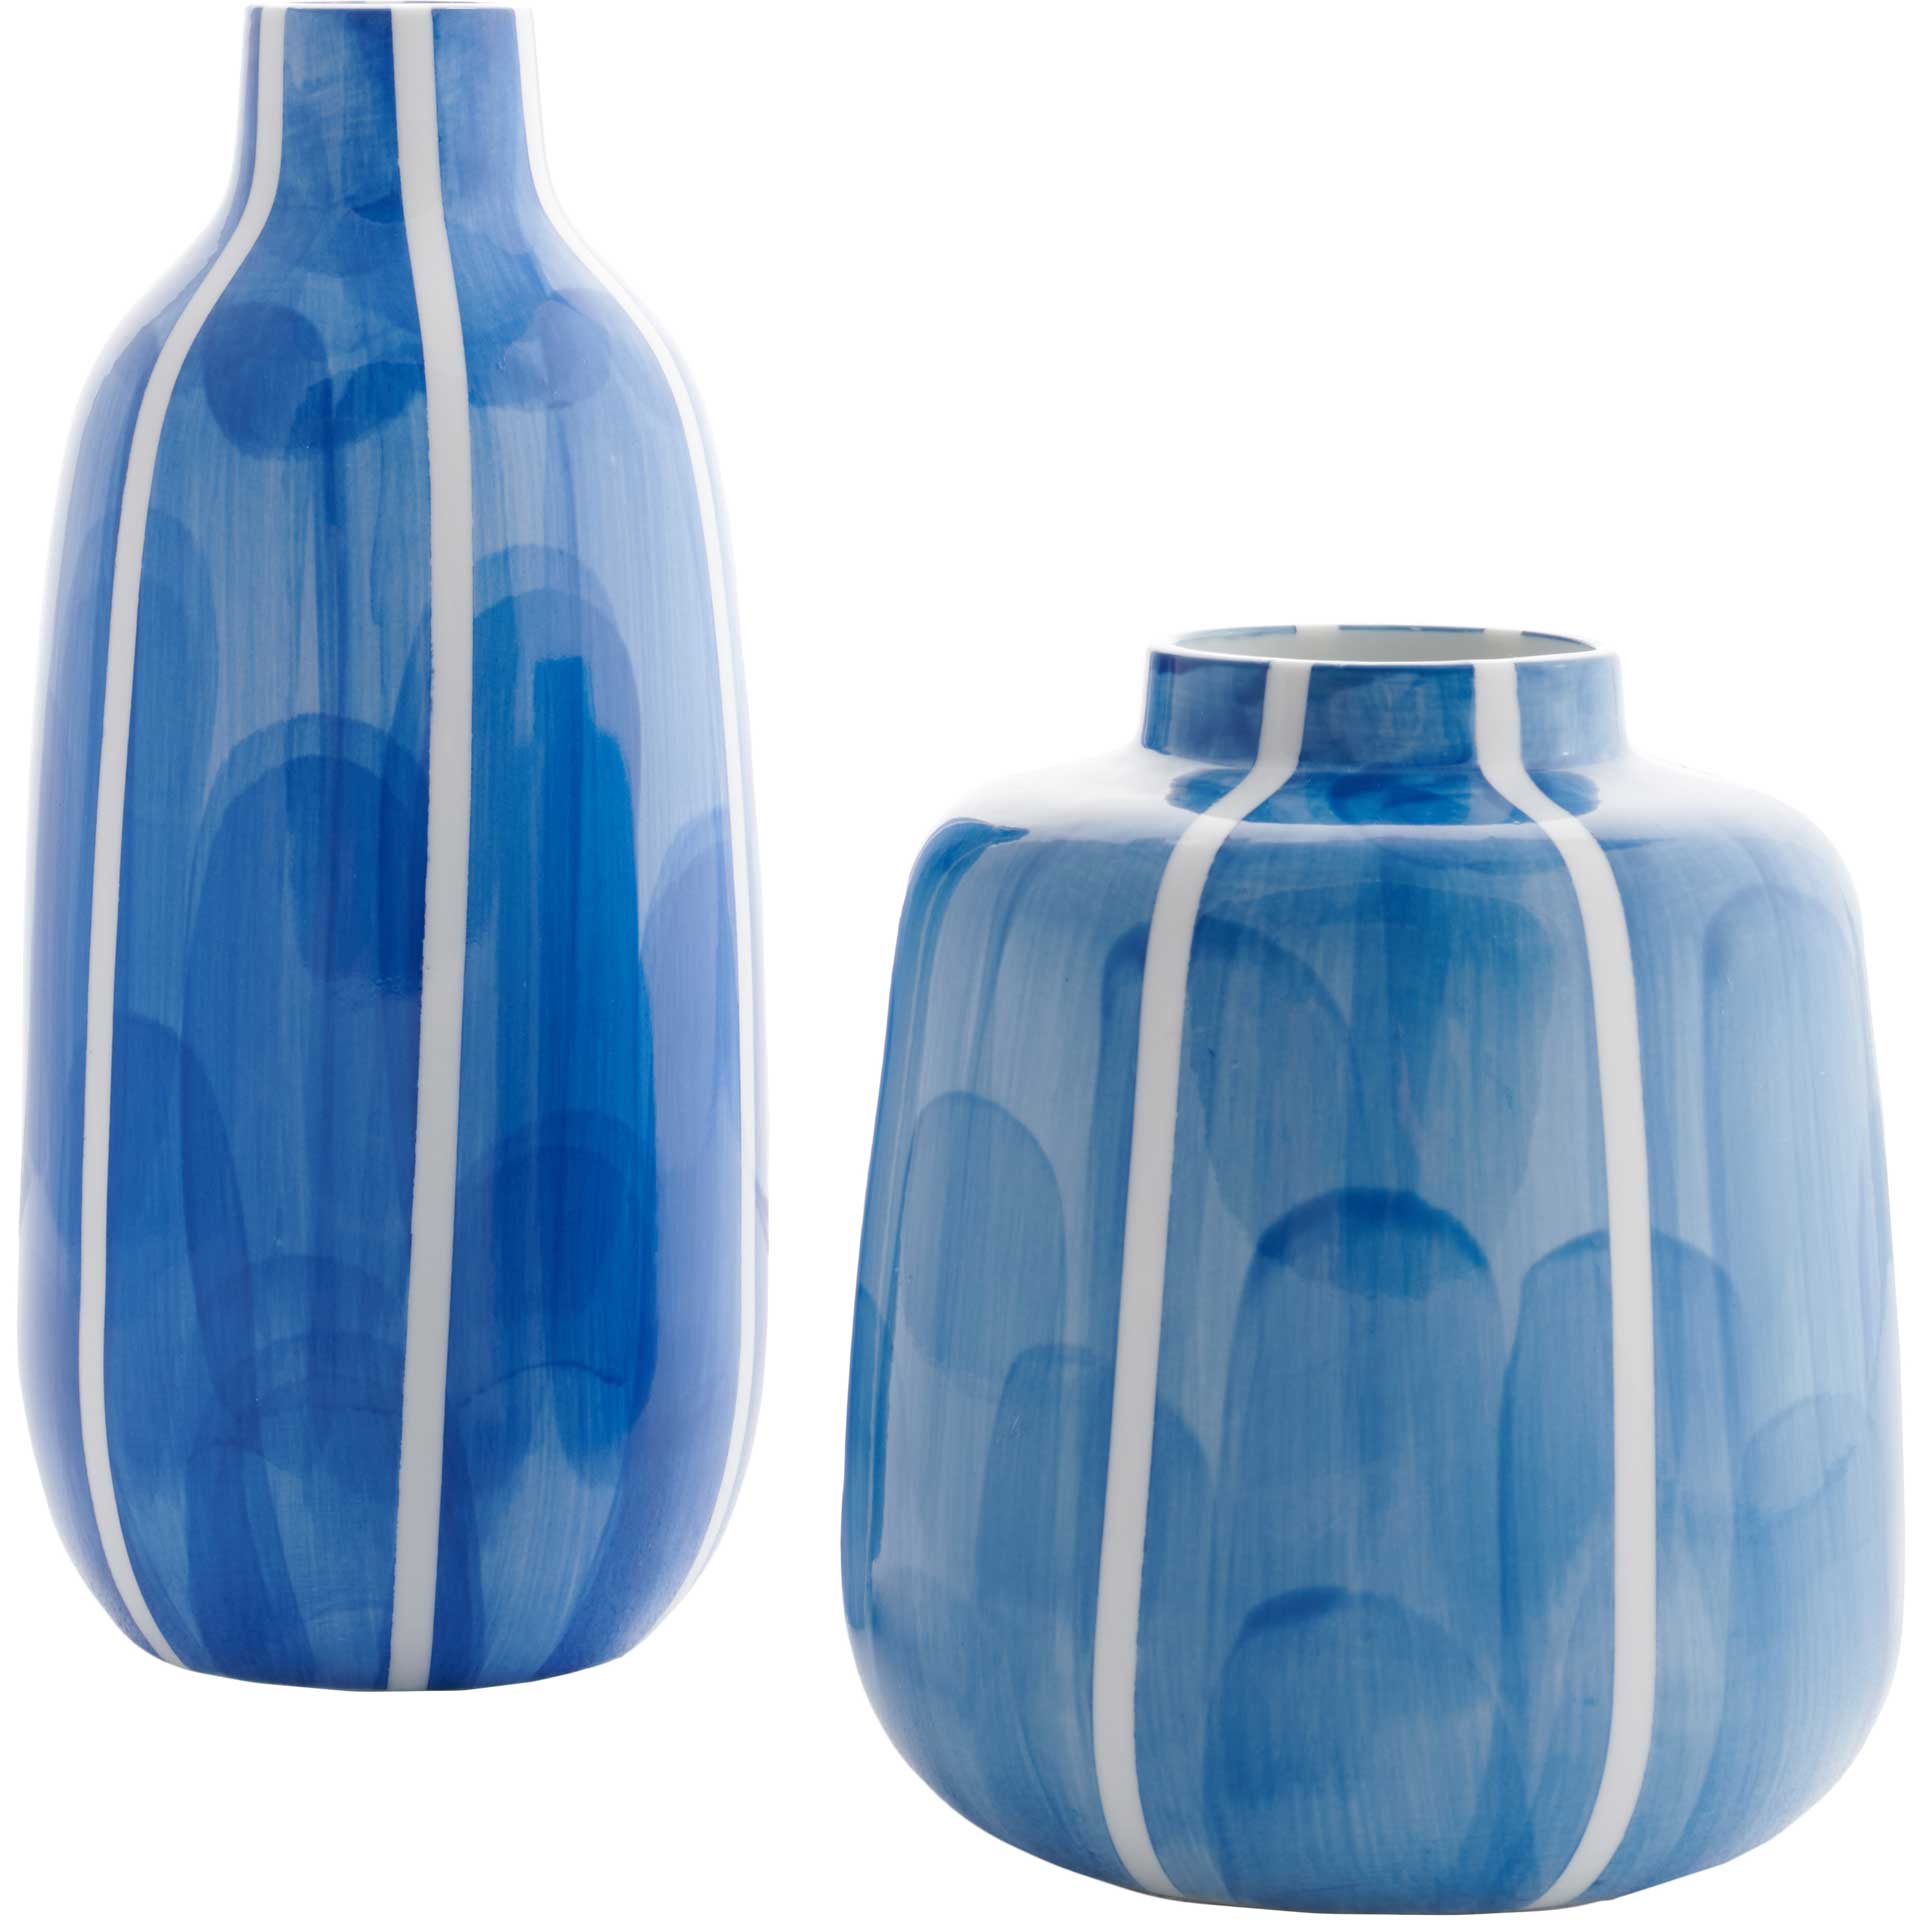 Saobi Ceramic Vase Blue/White (Set of 2)